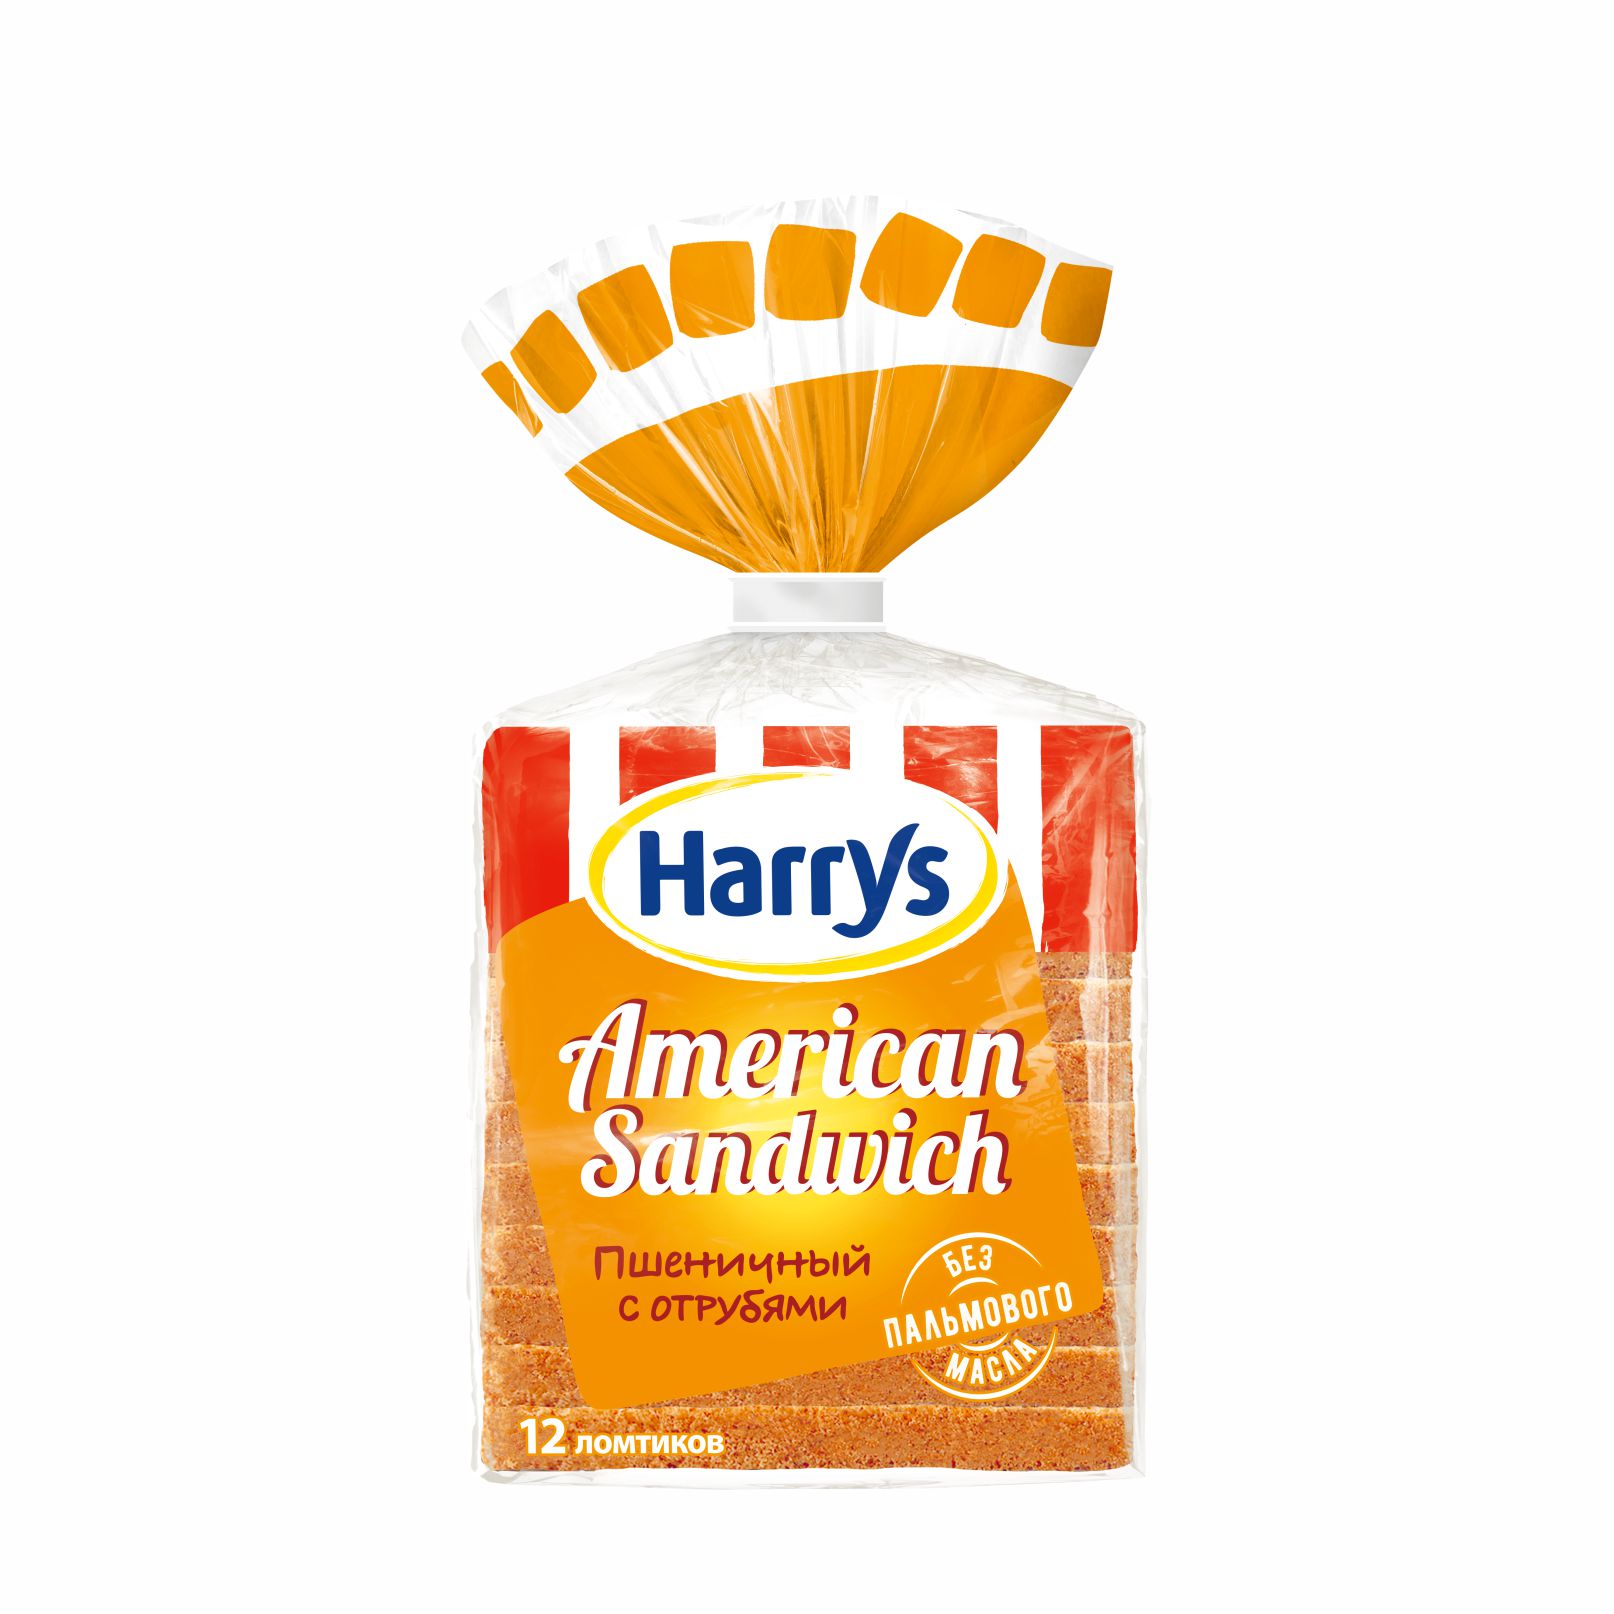 Хлеб с отрубями Harrys American Sandwich 515 г хлеб сандвичный harry s american sandwich пшеничный с отрубями 12 ломтиков 515 г